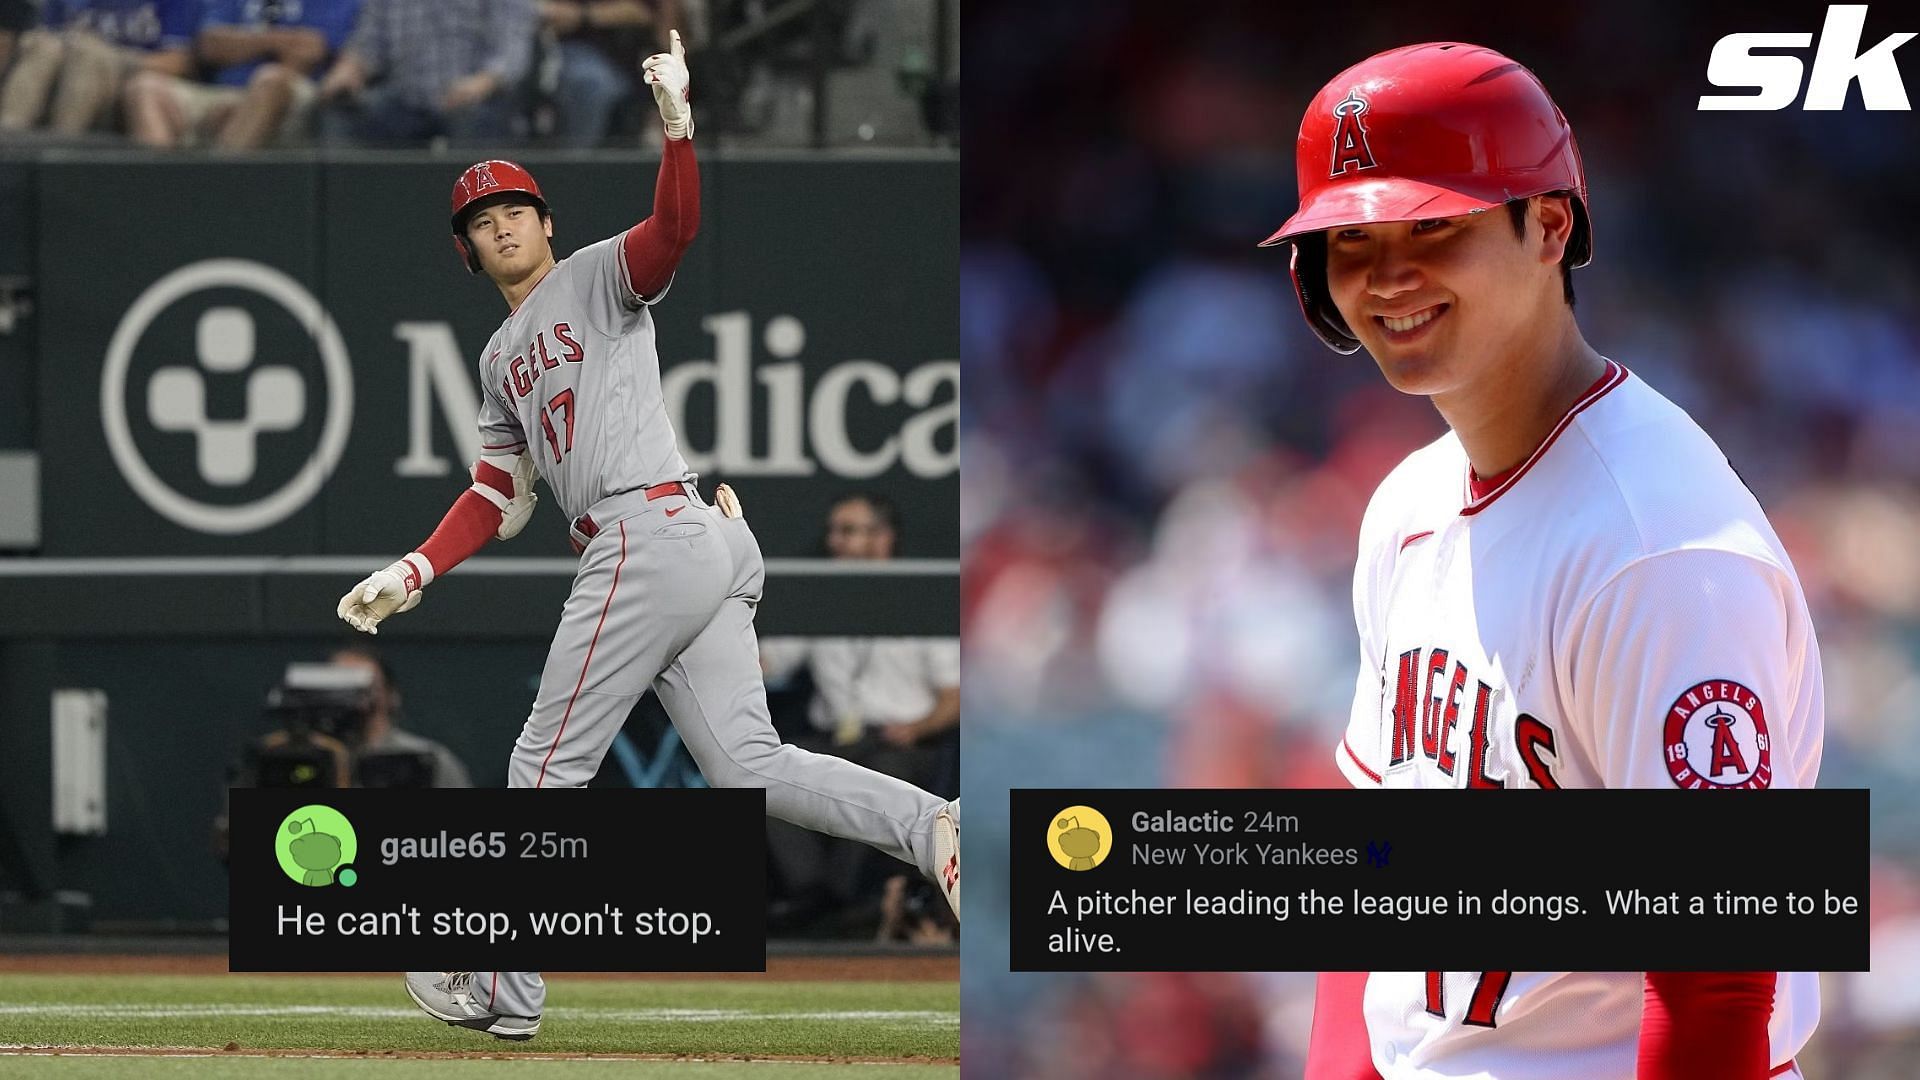 MLB Reddit reacts to Shohei Ohtani blasting his league-leading 23rd home run